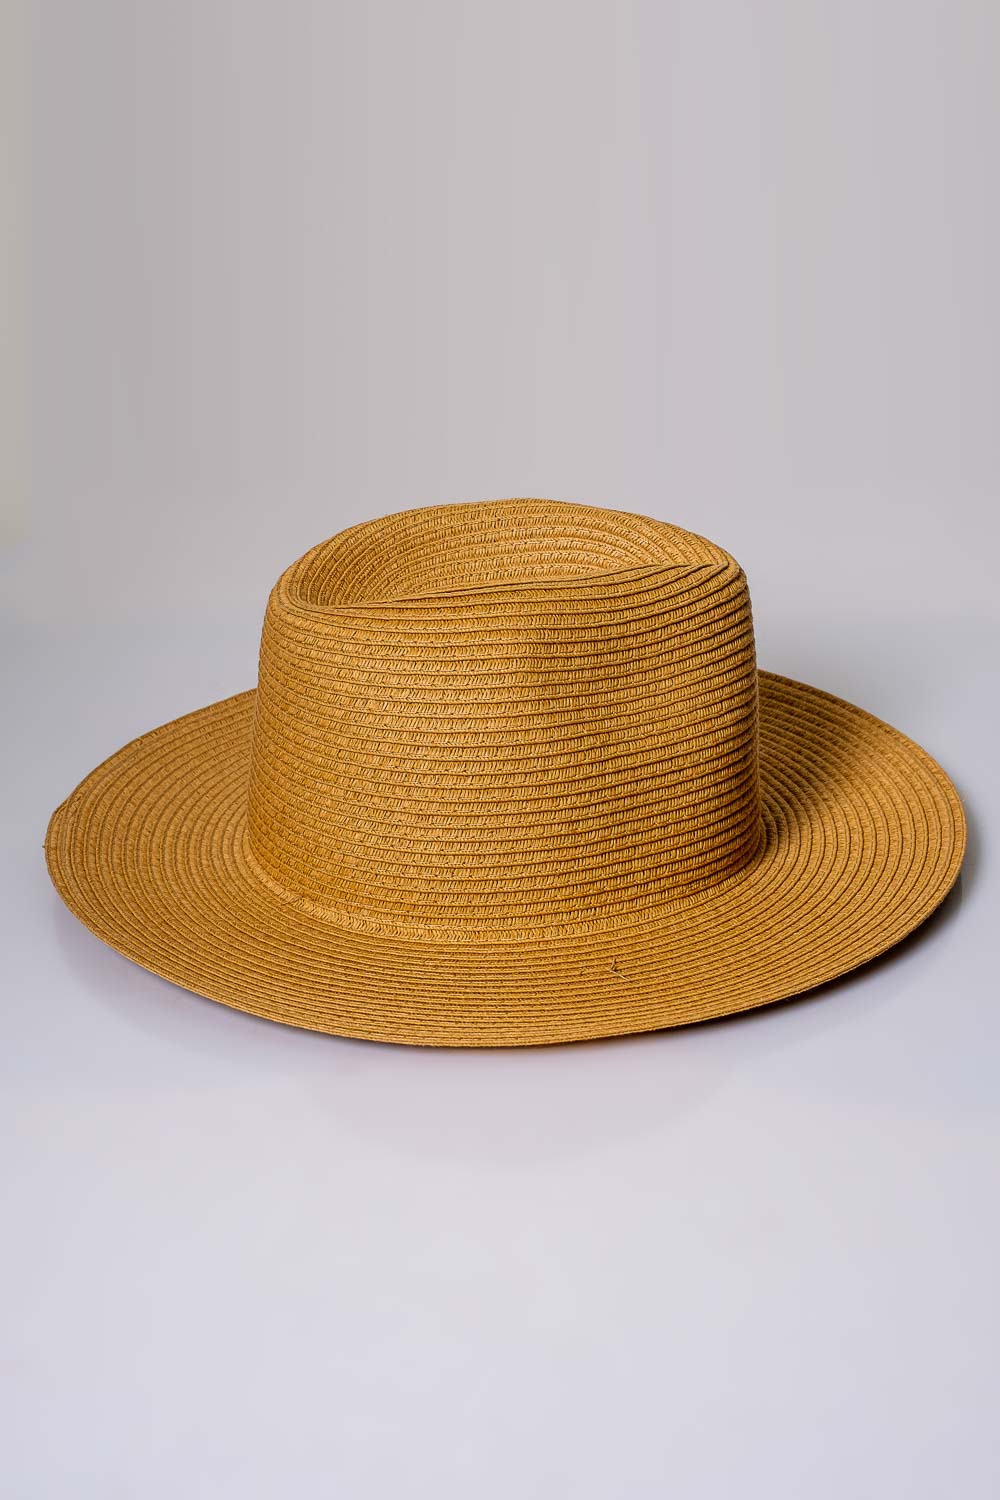 Odel Brown Beach Hat | Odel.lk